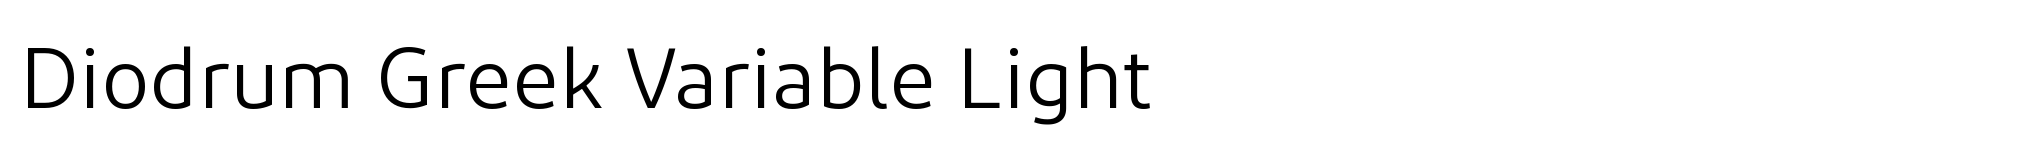 Diodrum Greek Variable Light image